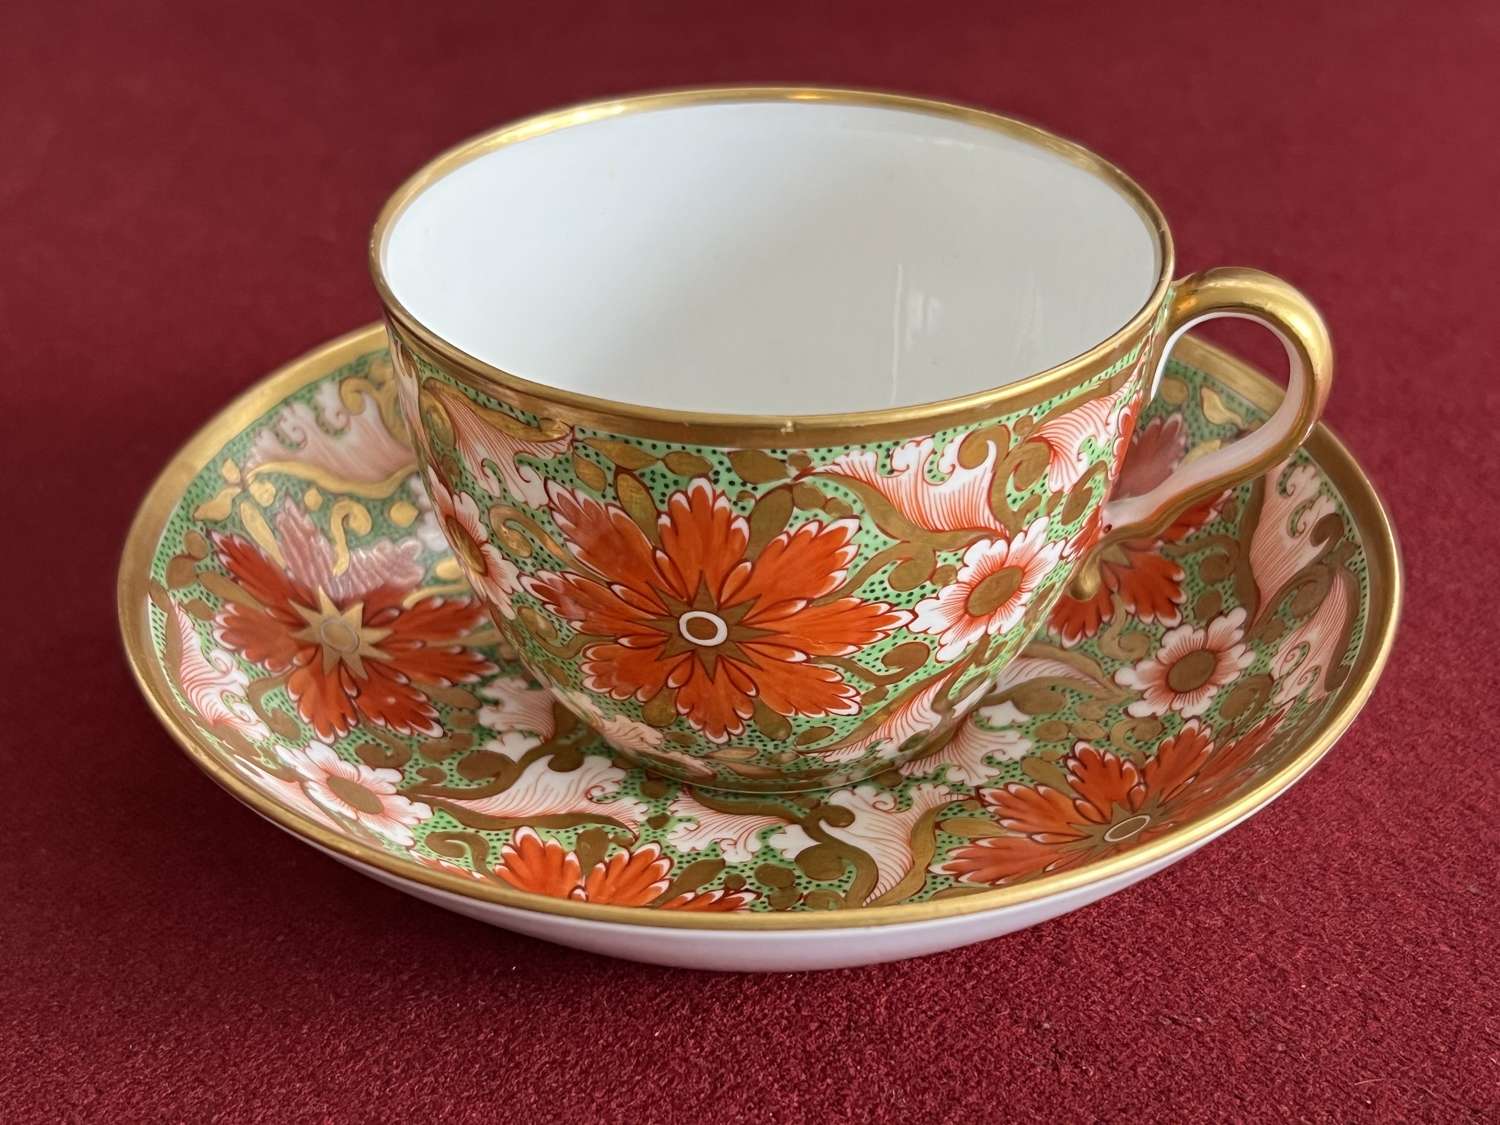 A Spode porcelain Tea Cup & Saucer in pattern 1382 c.1805-1810